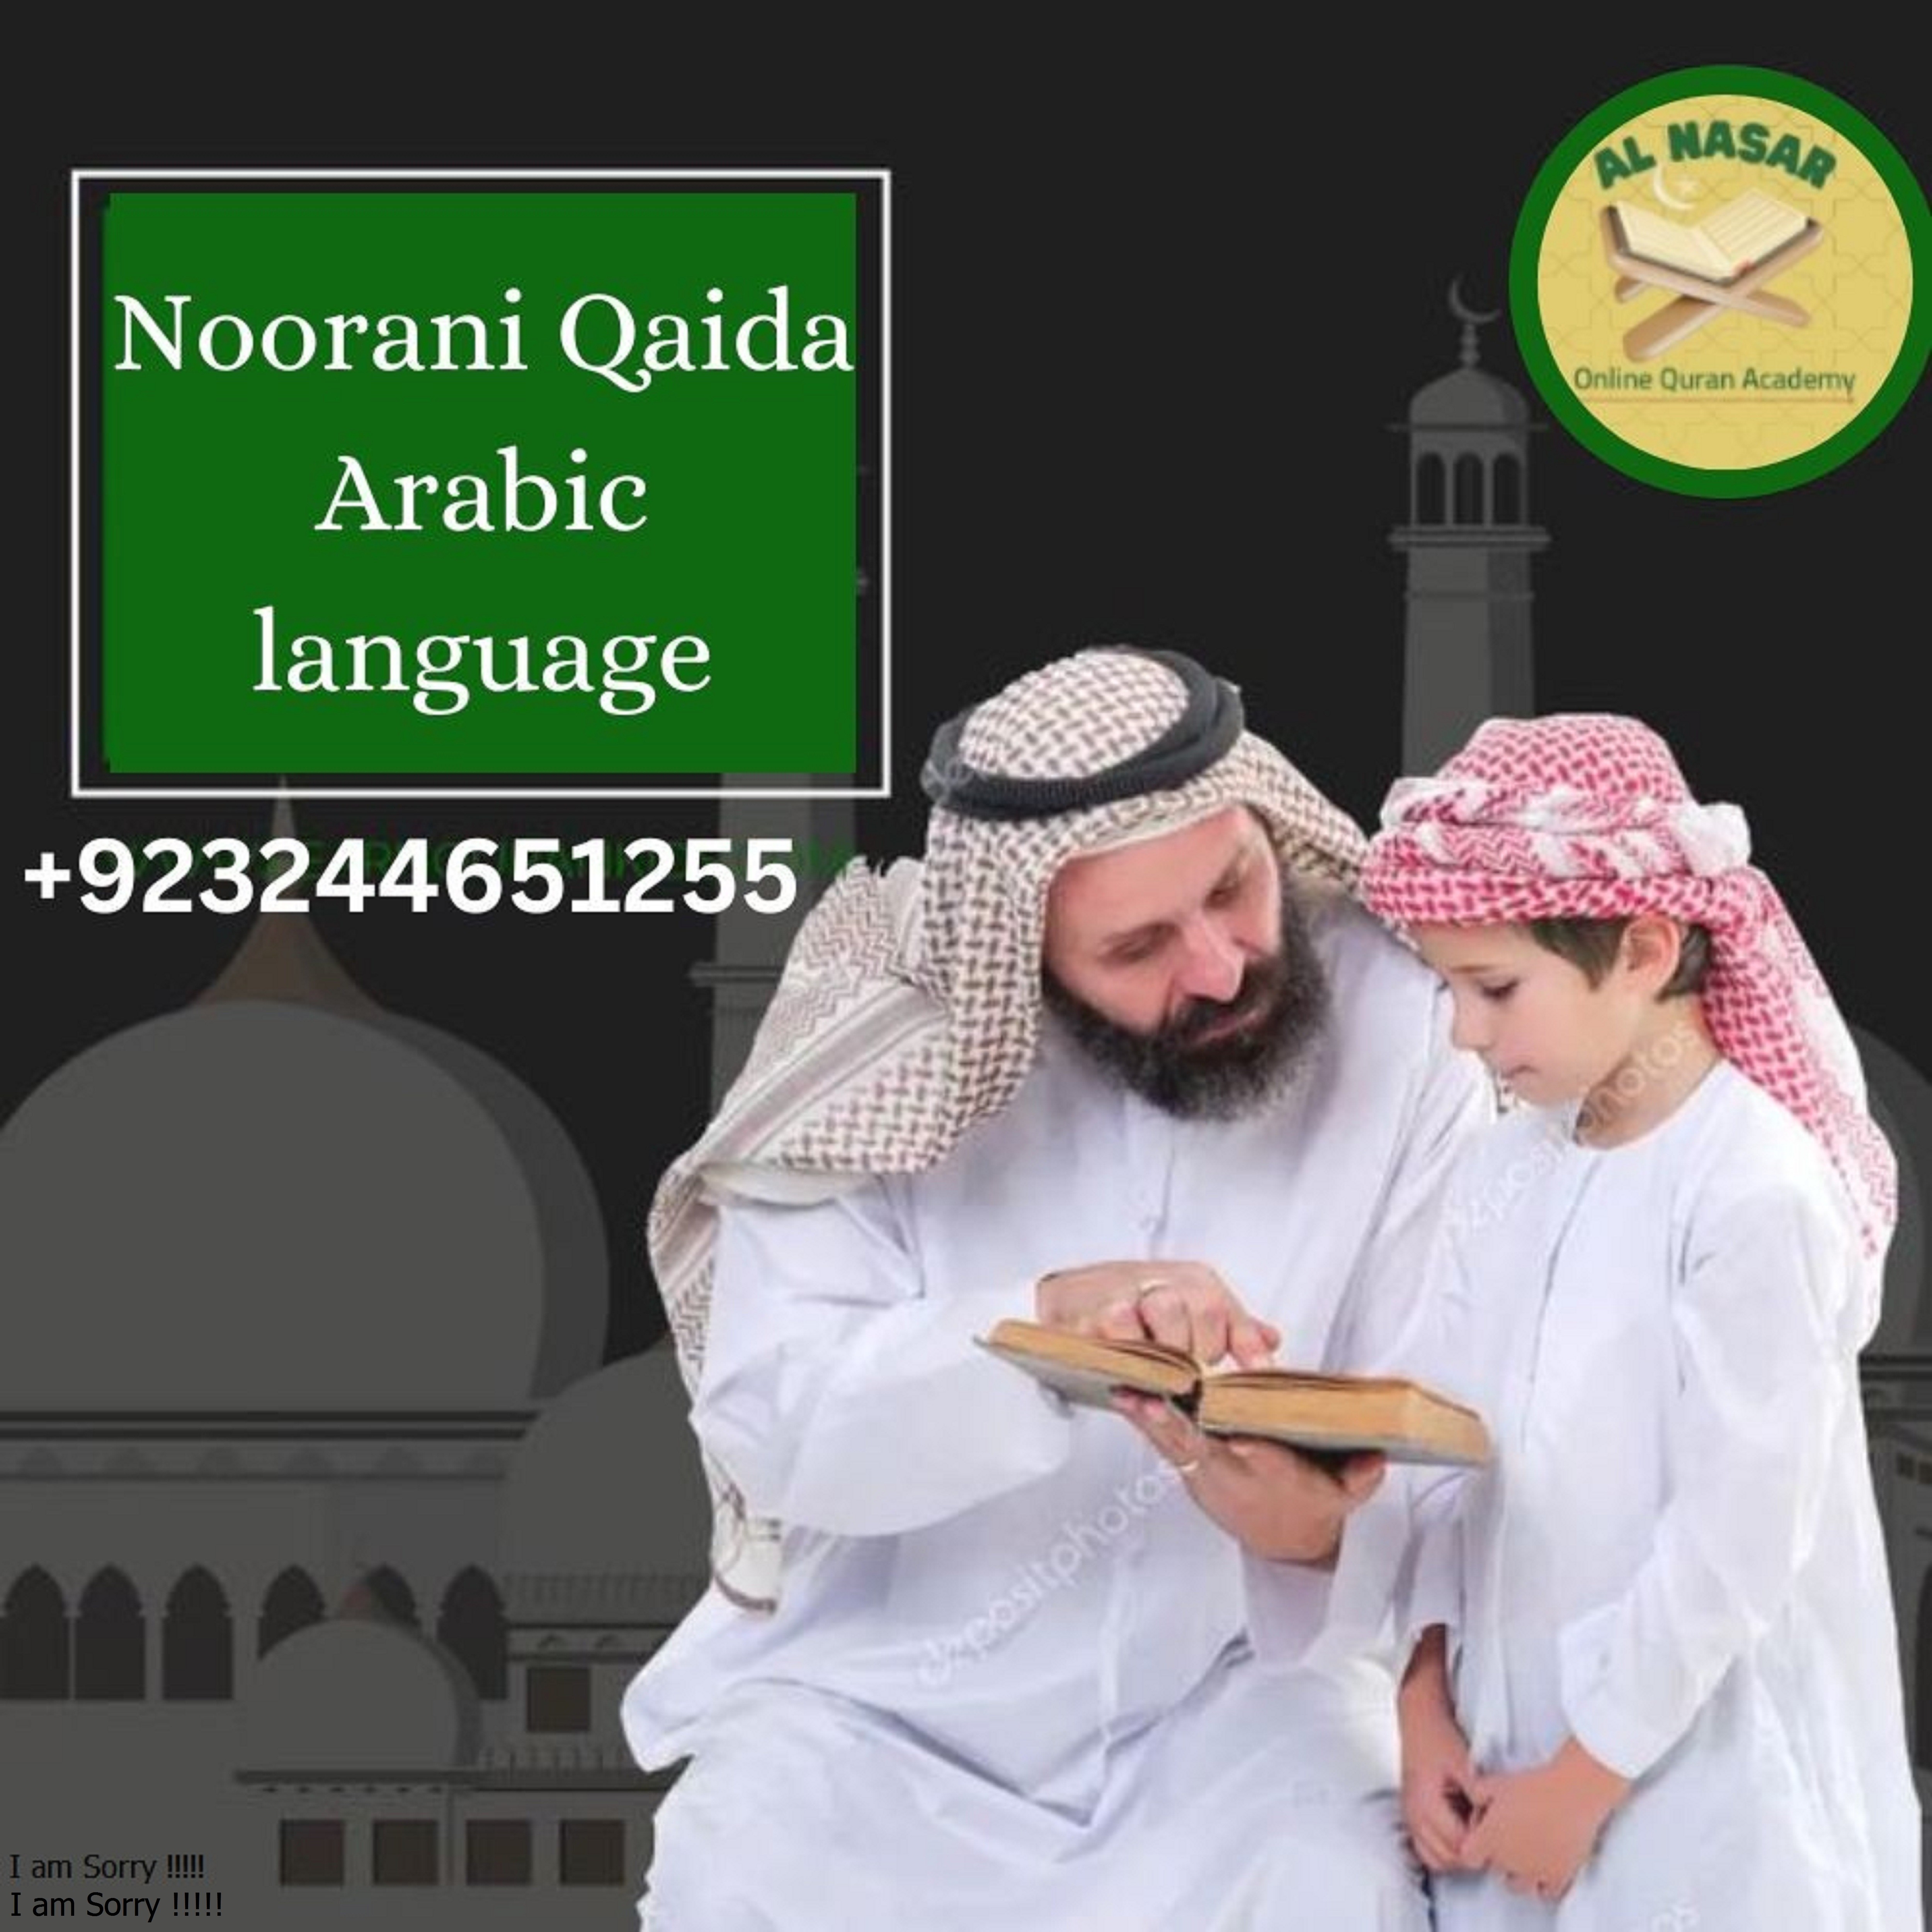 Noorani Qaida With English Transliteration | +923244651255